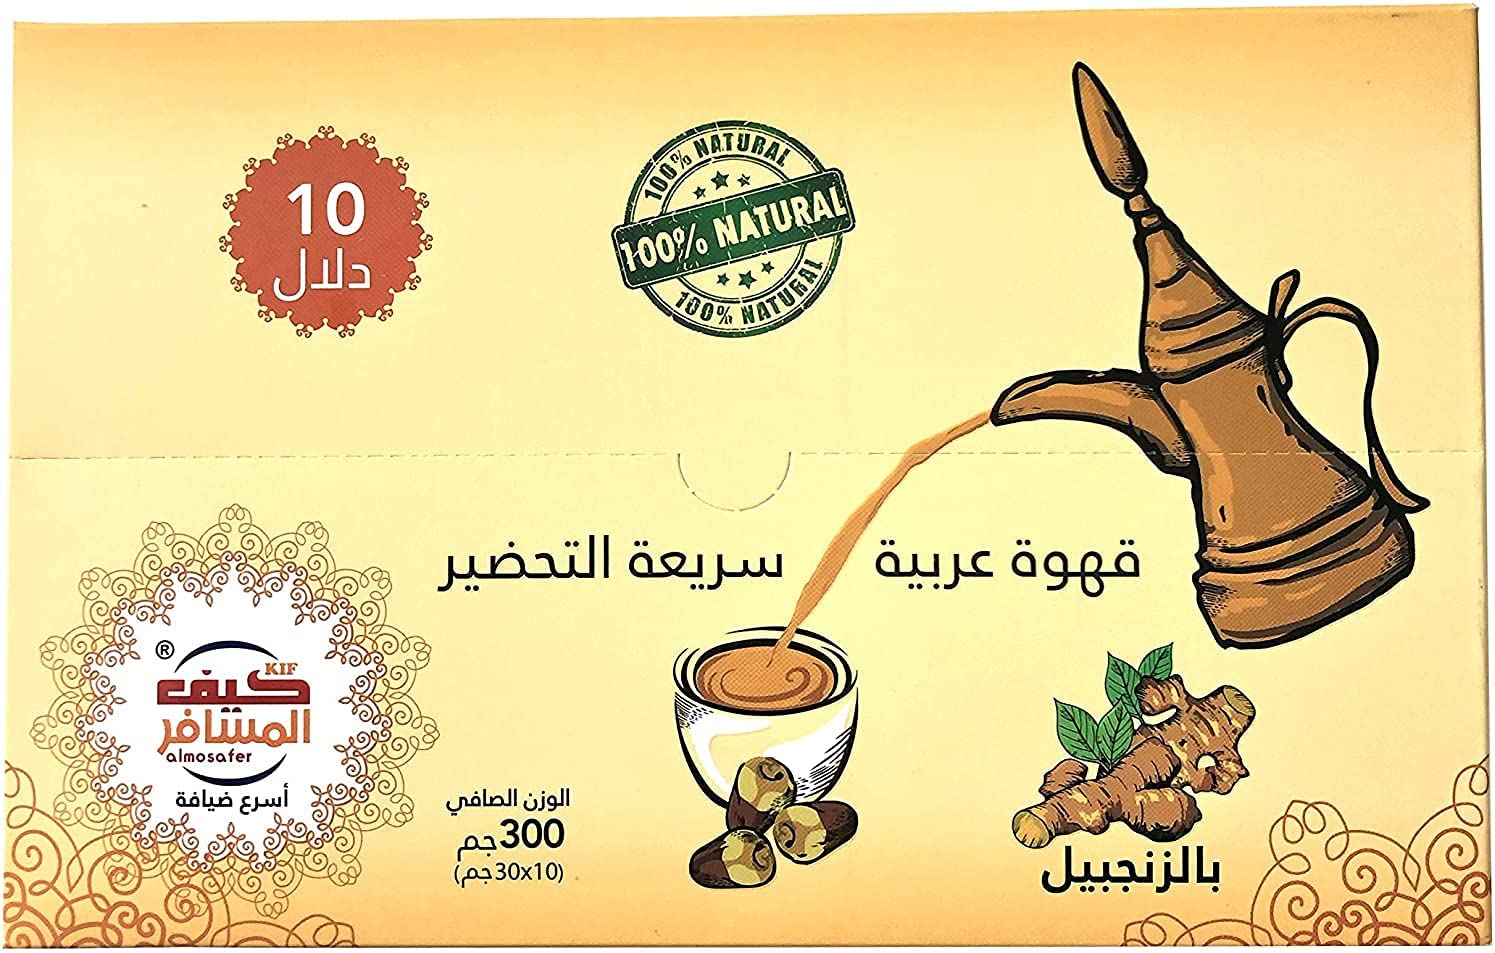 Kif Al Mosafer Arabic Coffee With Ginger 30grX10pcs  